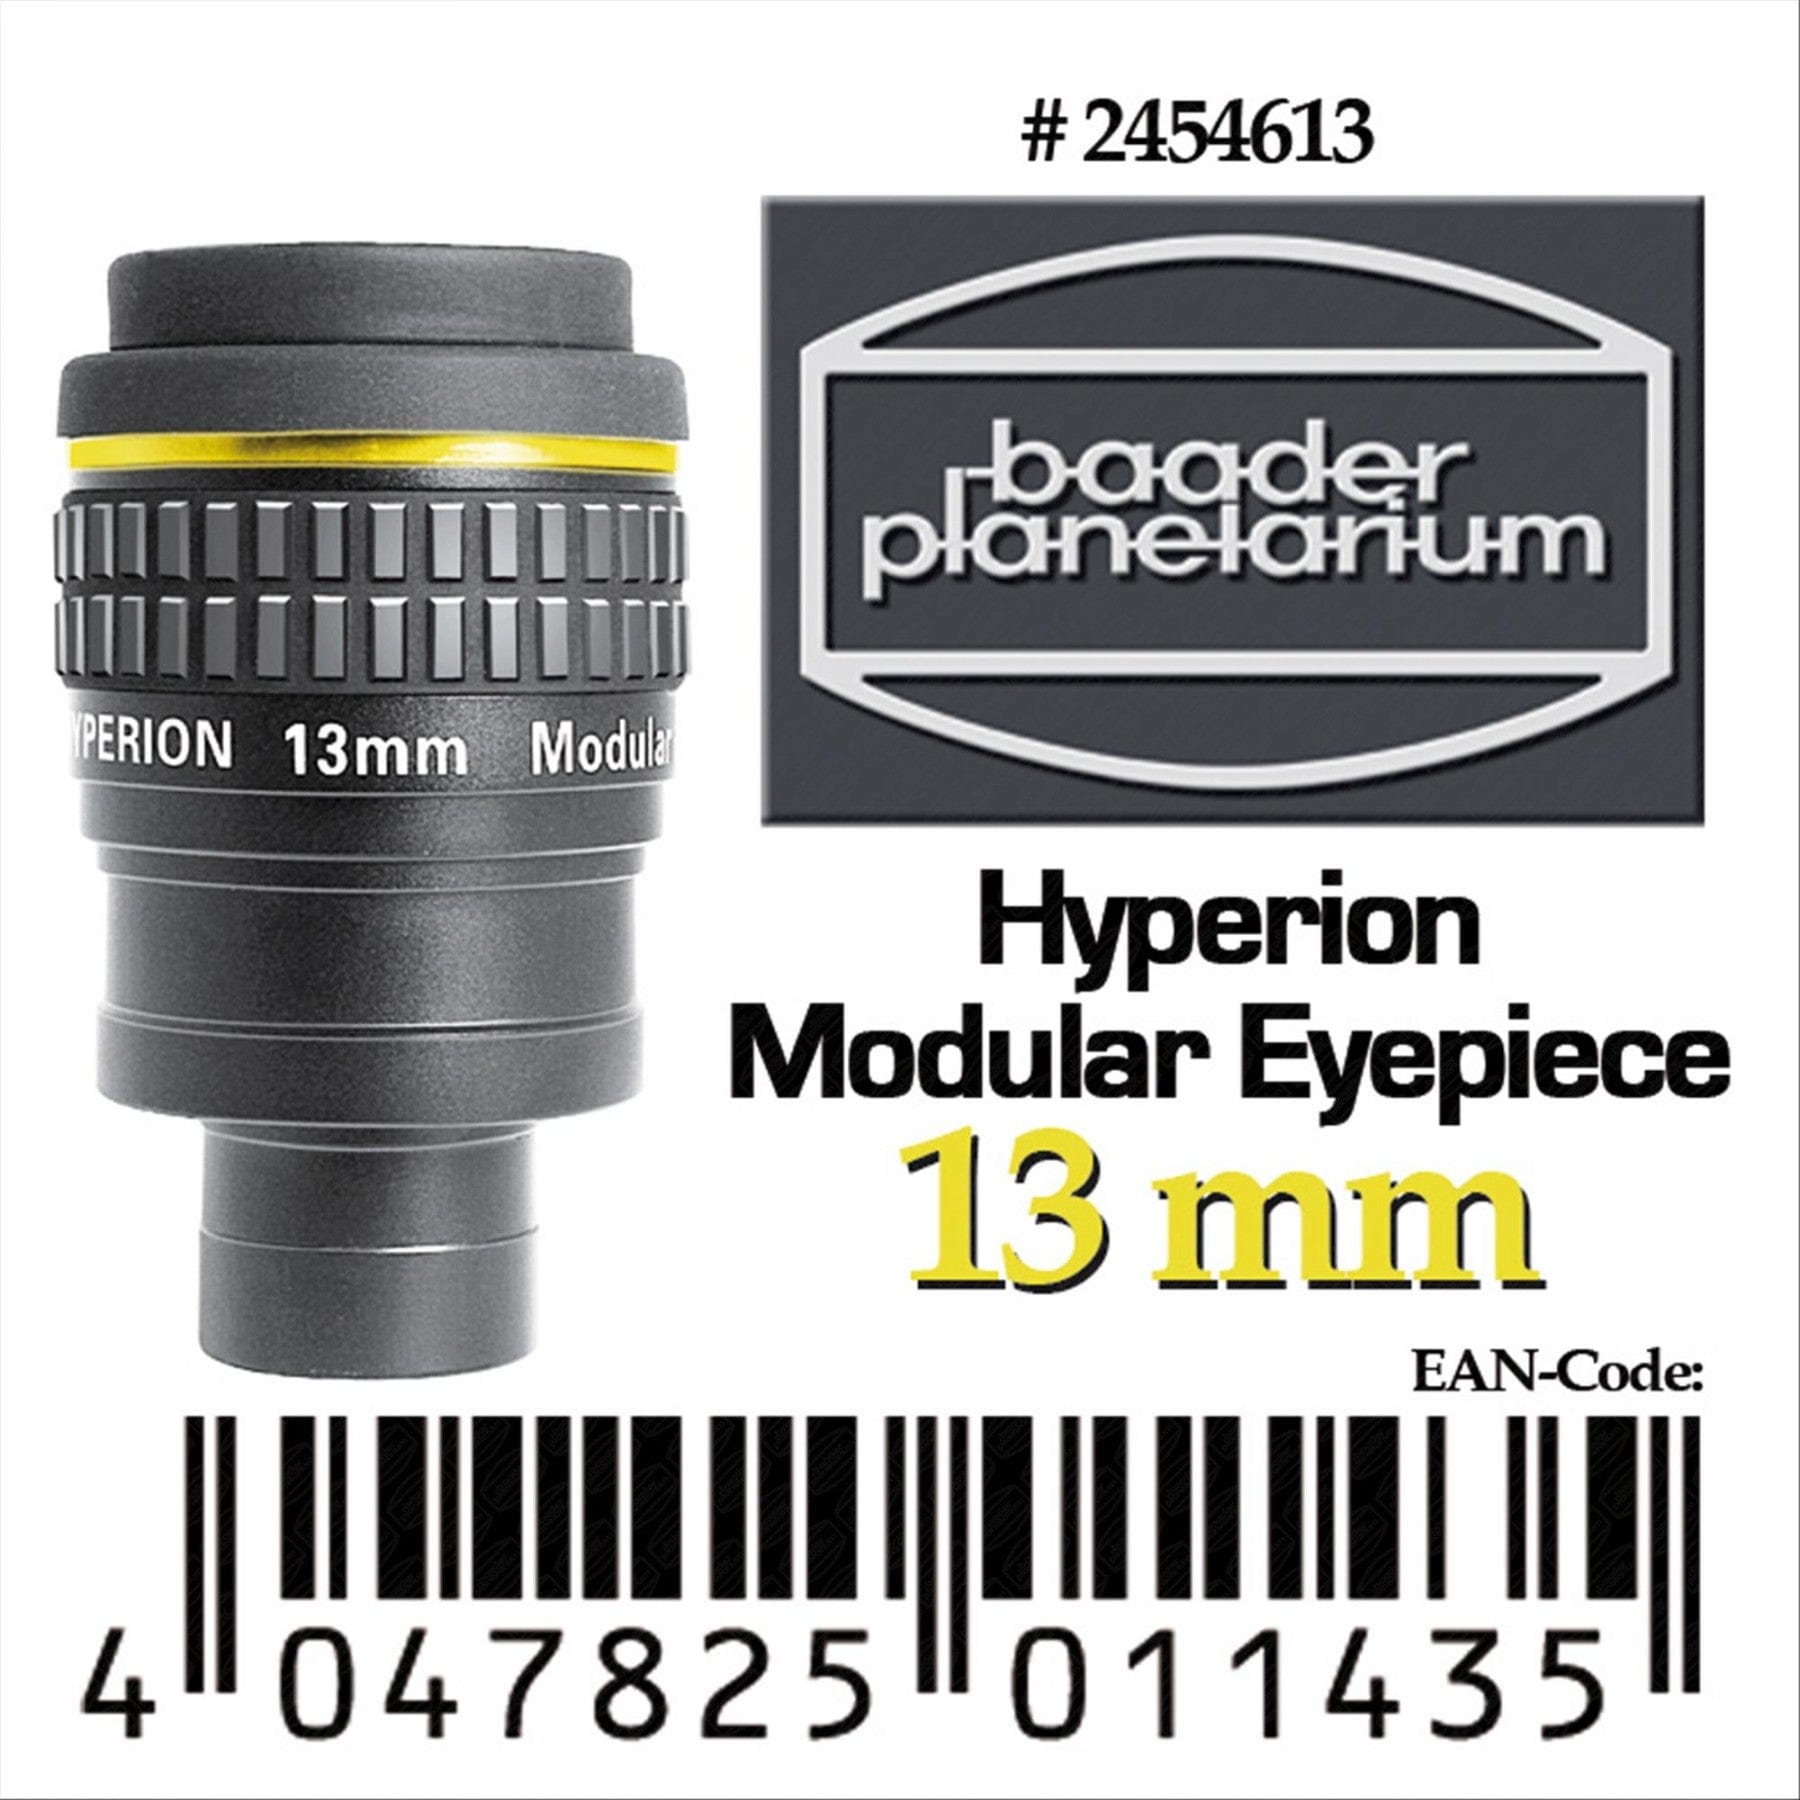 Baader Planetarium Eyepiece Baader Hyperion 13mm 68 Degree Modular Eyepiece - 2454613